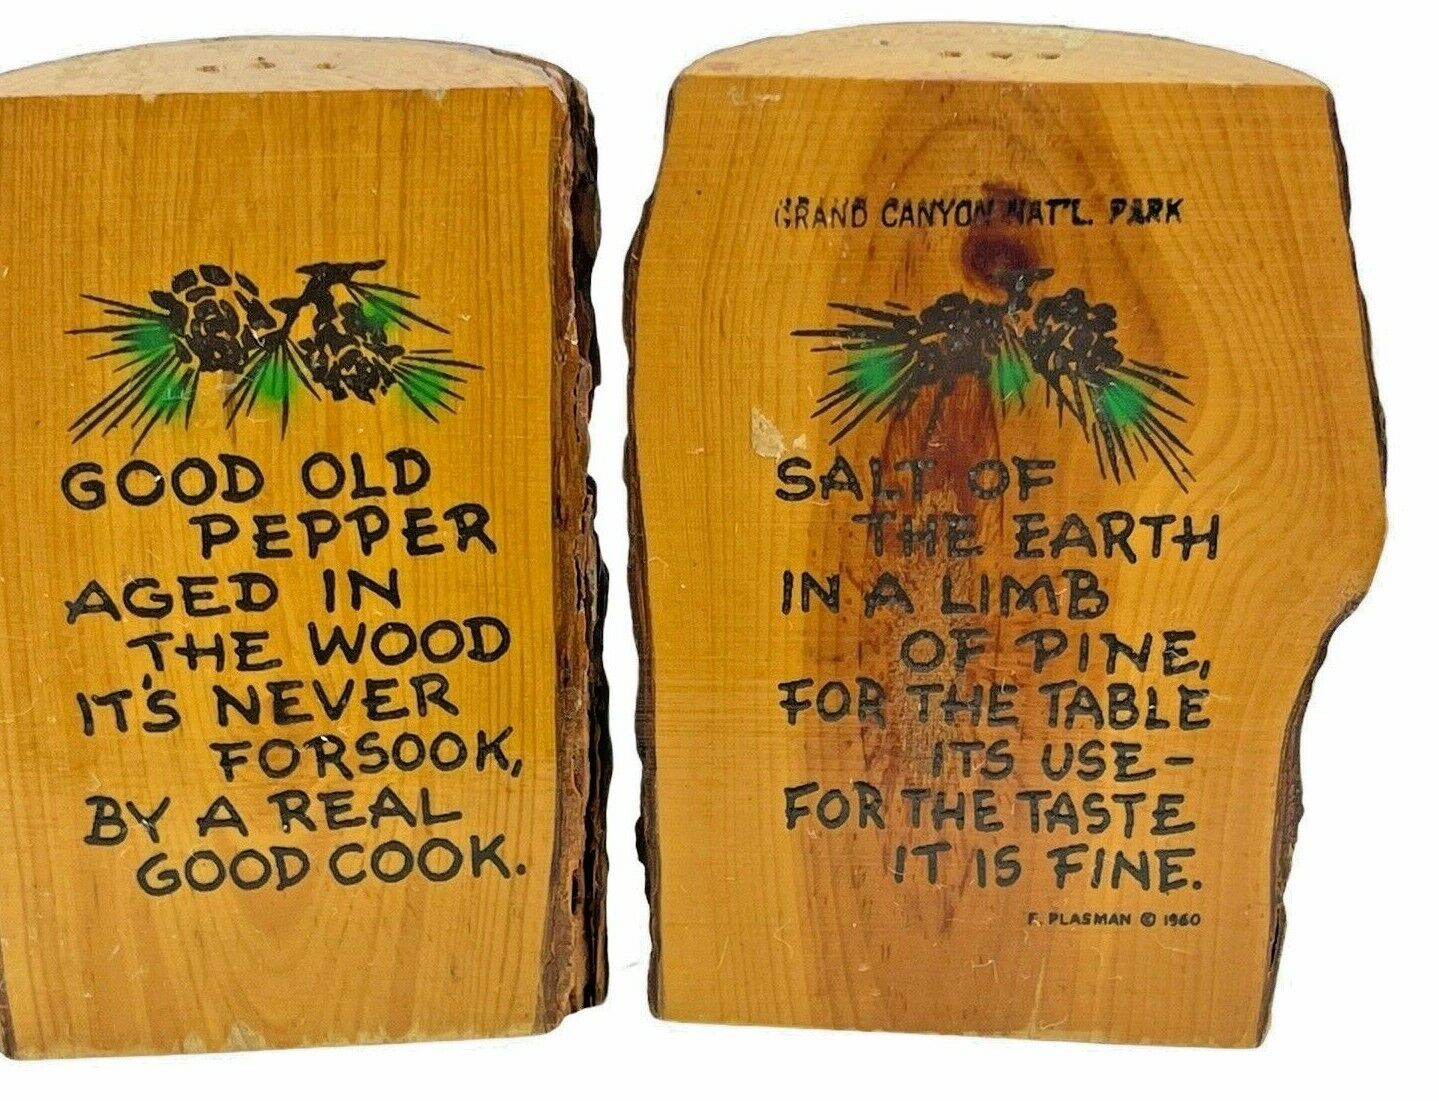 Vintage Wood Tree Stump Salt of Earth Good Old Pepper Salt and Pepper Shakers